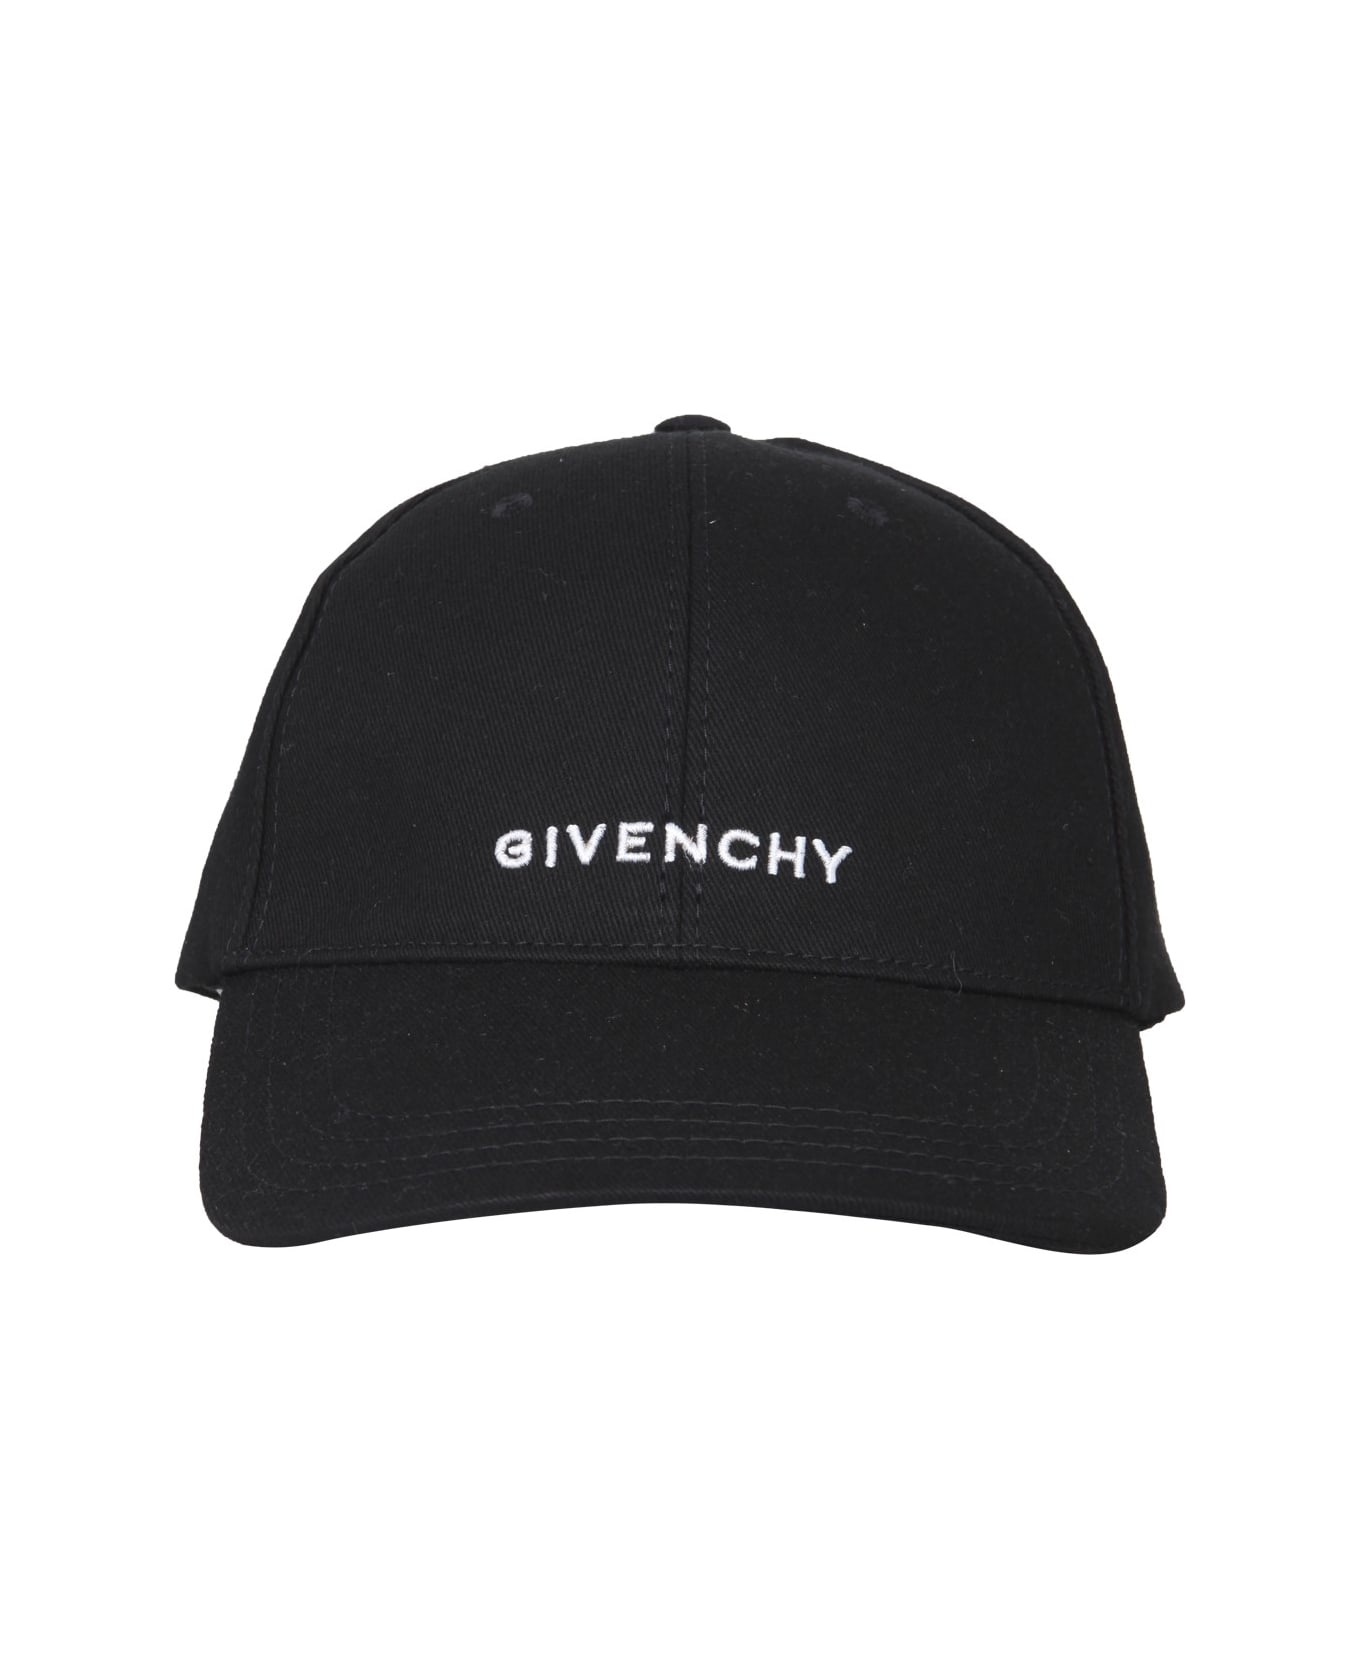 Givenchy 4g Hat warm - Black